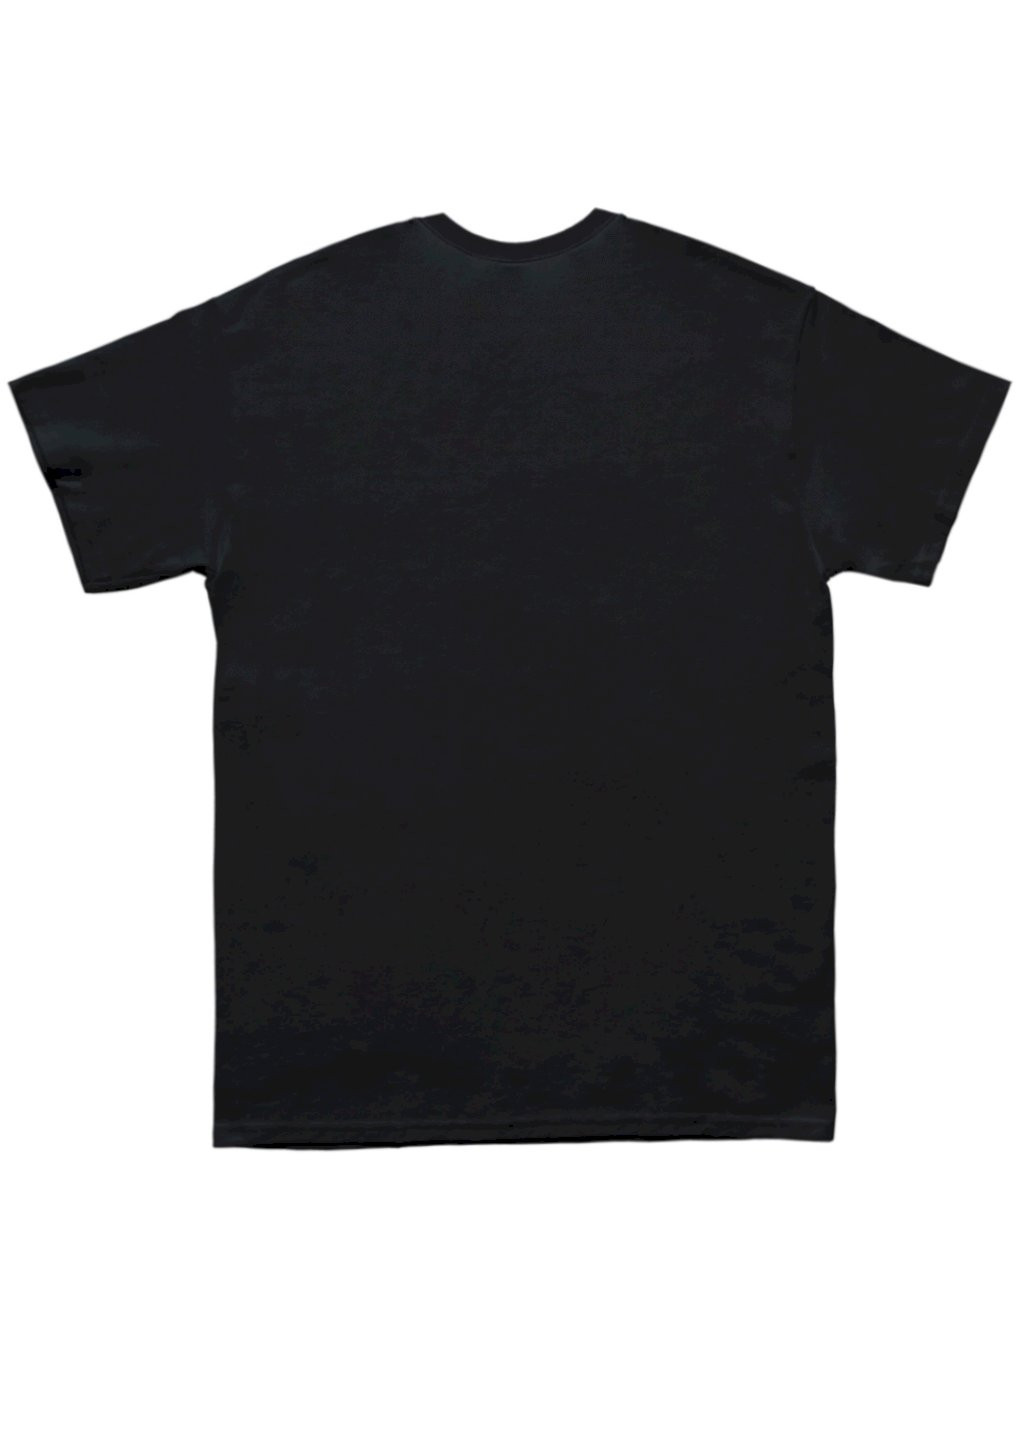 Черная футболка мужская черная "space face" Trace of Space